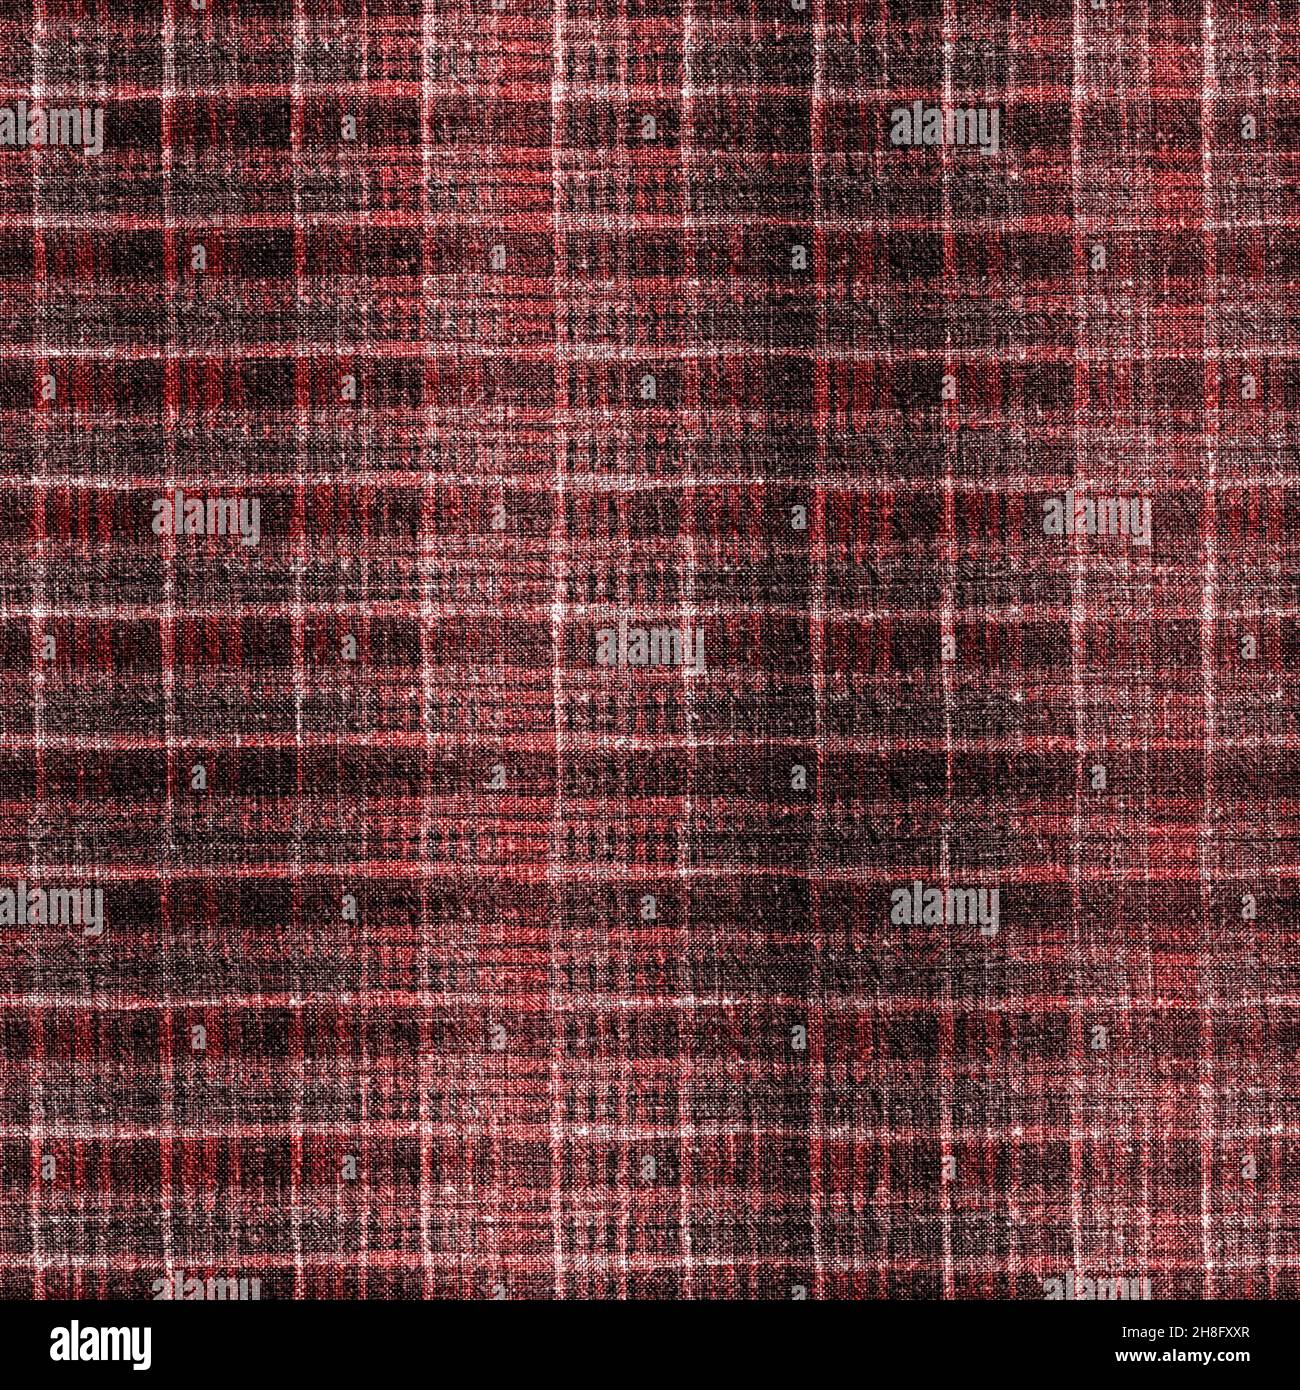 https://c8.alamy.com/comp/2H8FXXR/retro-red-black-buffalo-plaid-check-seamless-pattern-traditional-american-country-lumberjack-style-rustic-square-checkered-fabric-texture-2H8FXXR.jpg